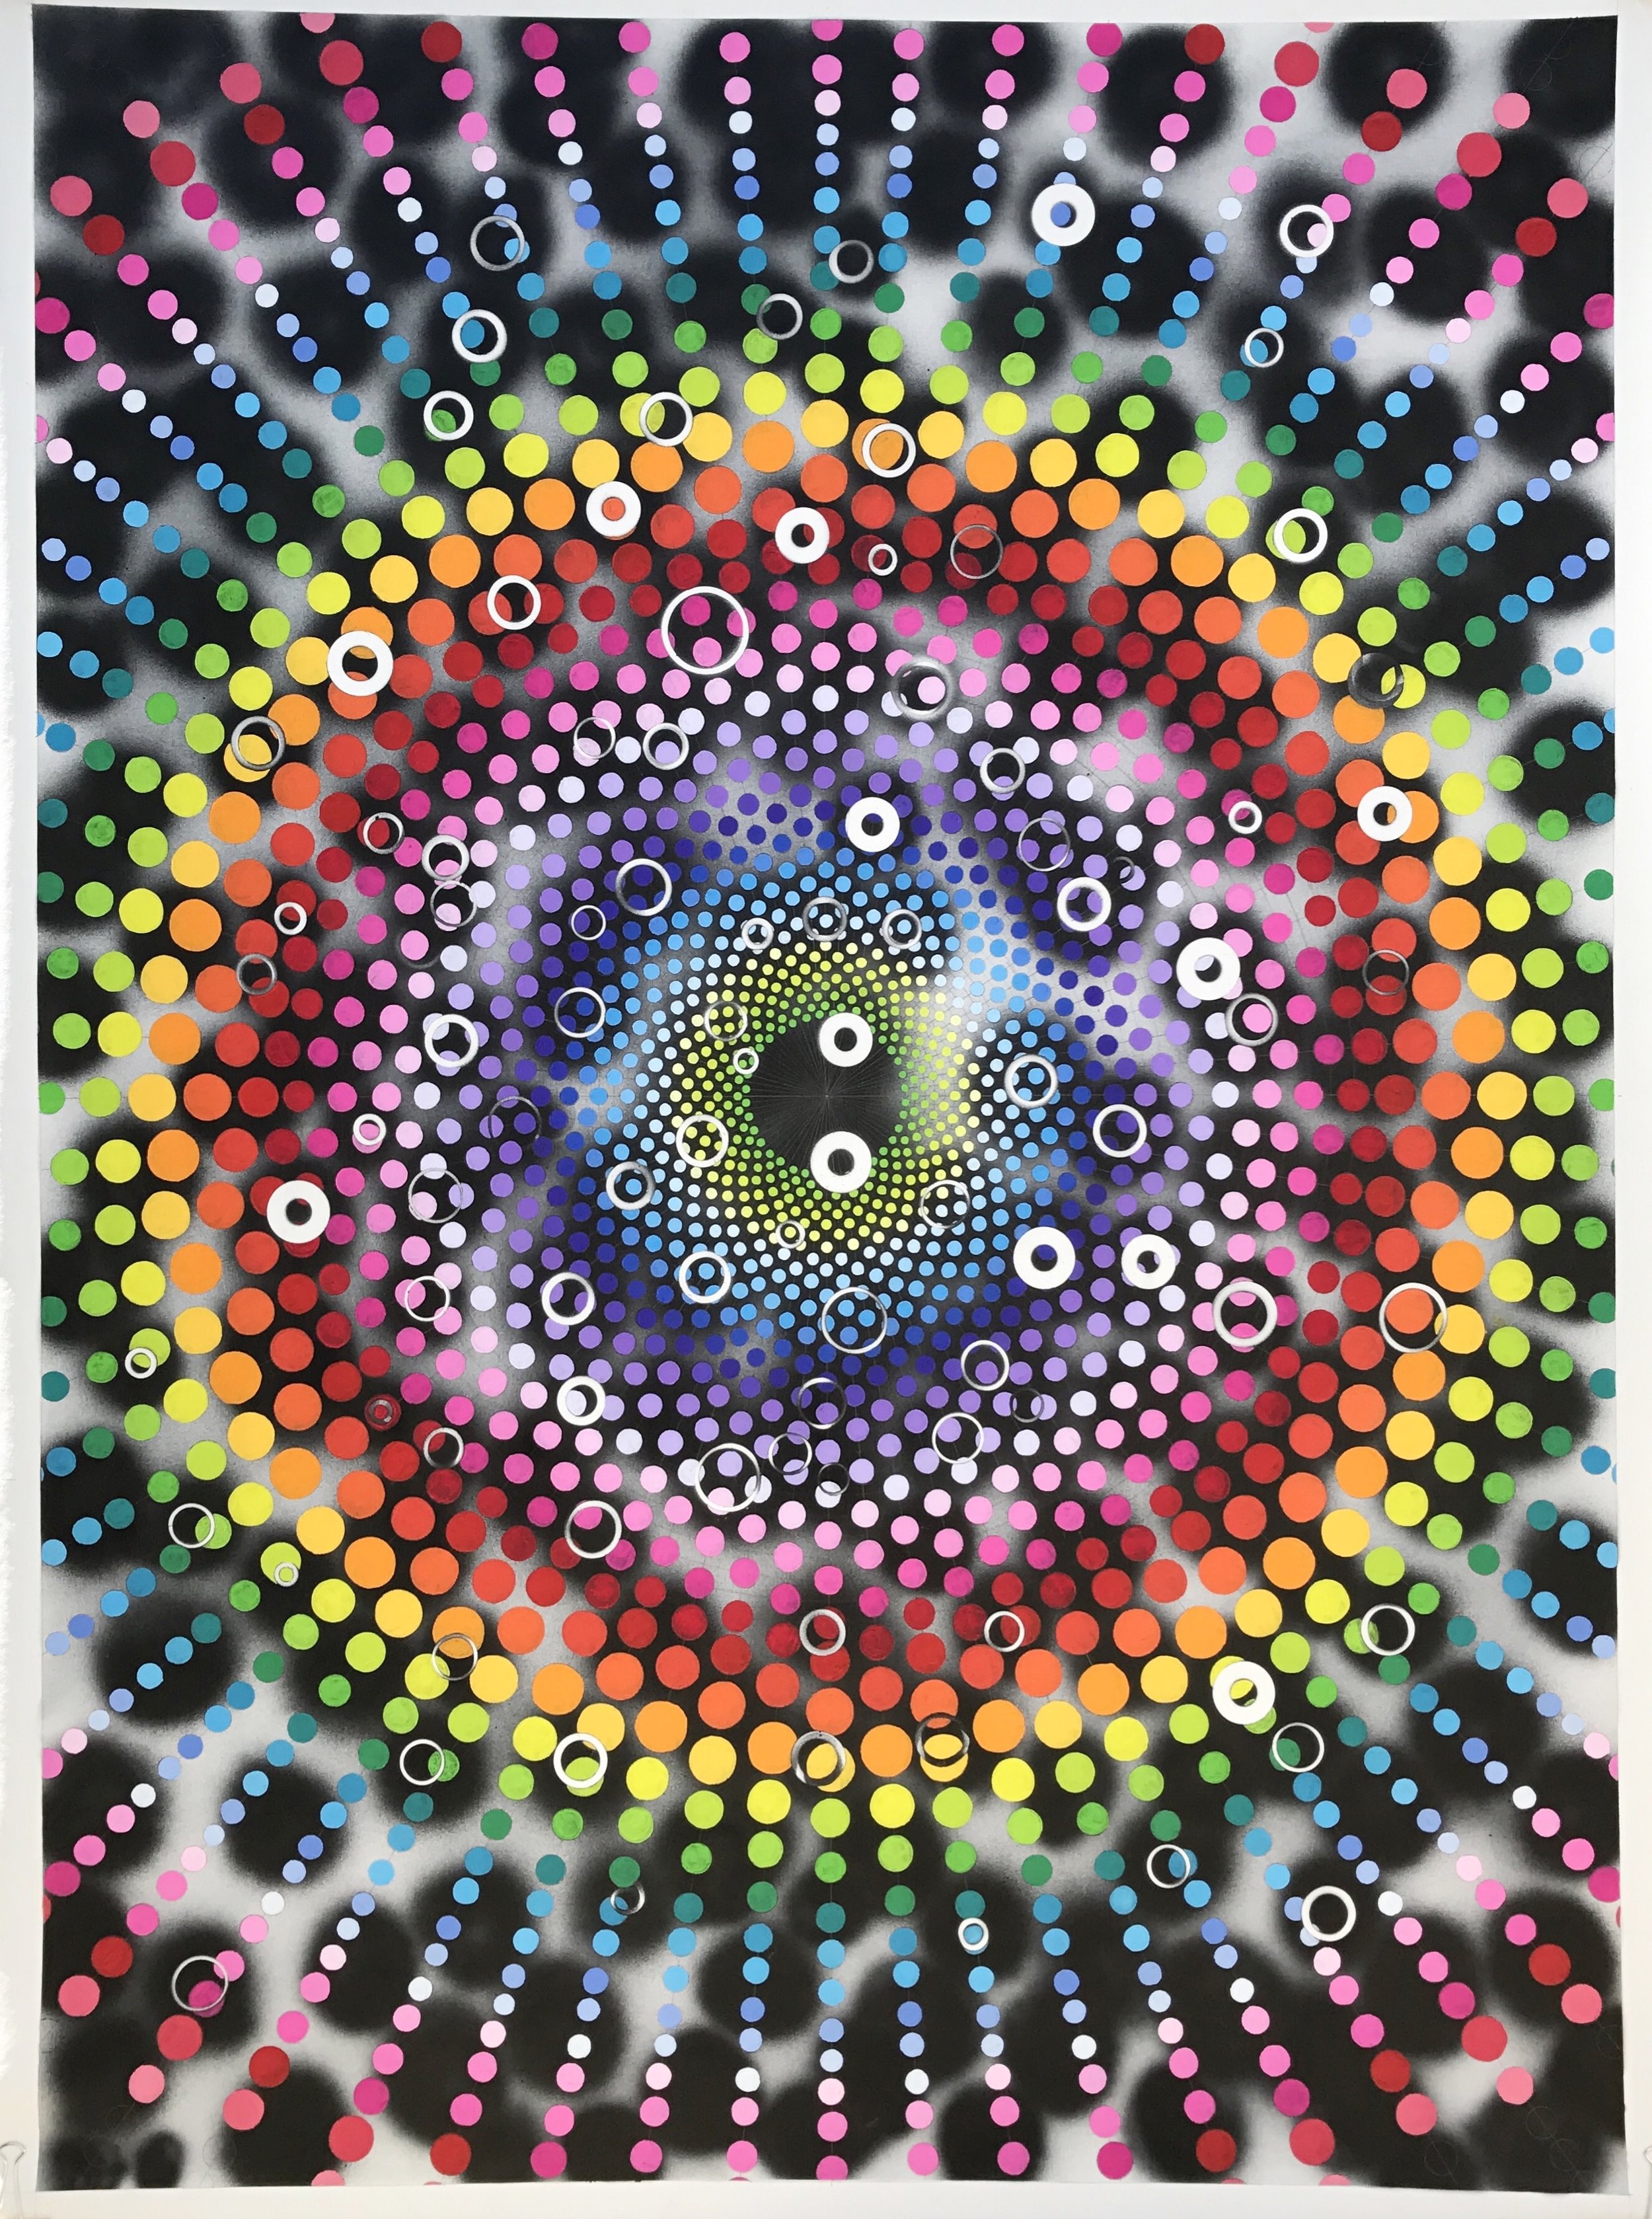 Mandala #13 - Mandala Madness - Art, Abstract, Soul, Color, Life